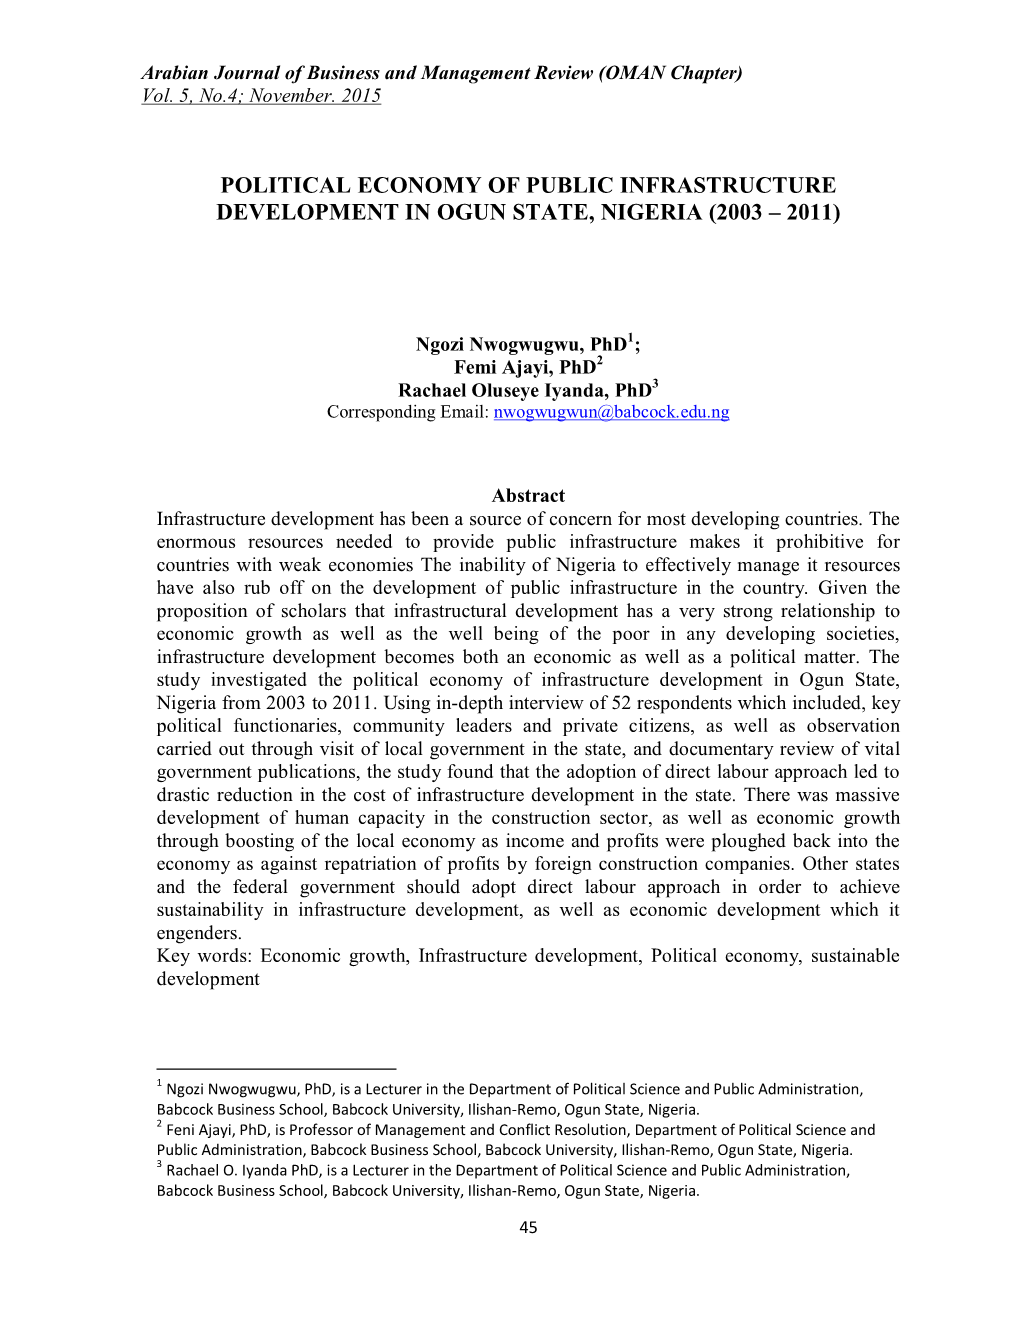 Political Economy of Public Infrastructure Development in Ogun State, Nigeria (2003 – 2011)